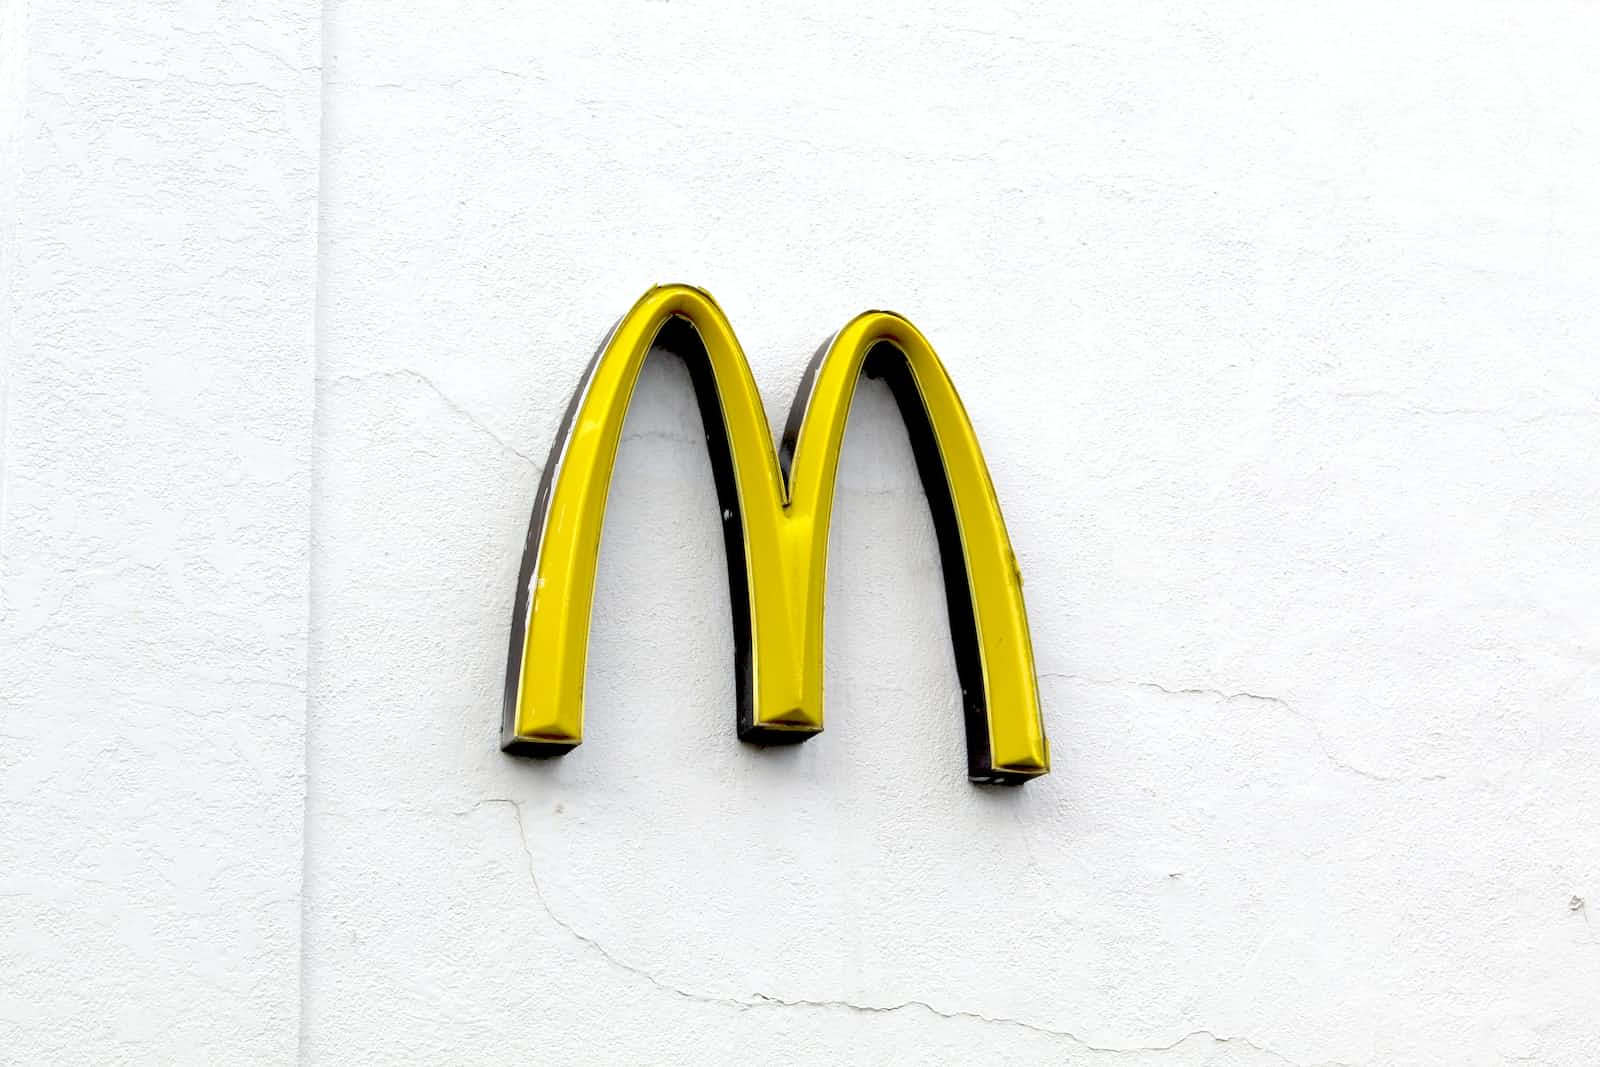 McDonald's logo on a McDonald's restaurant